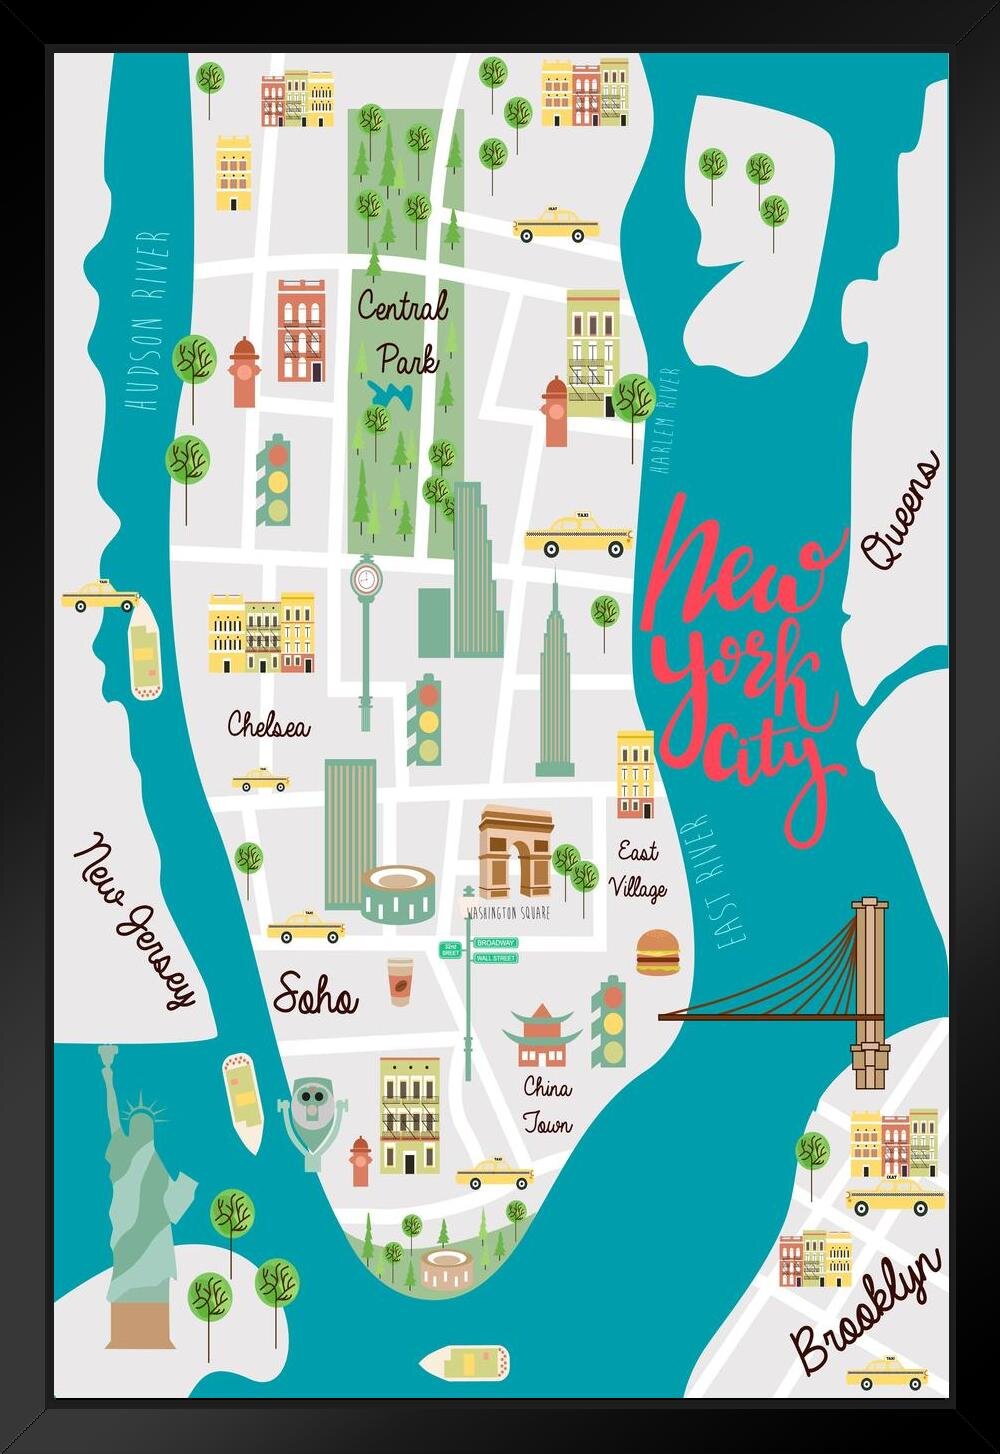 hudson river map for kids